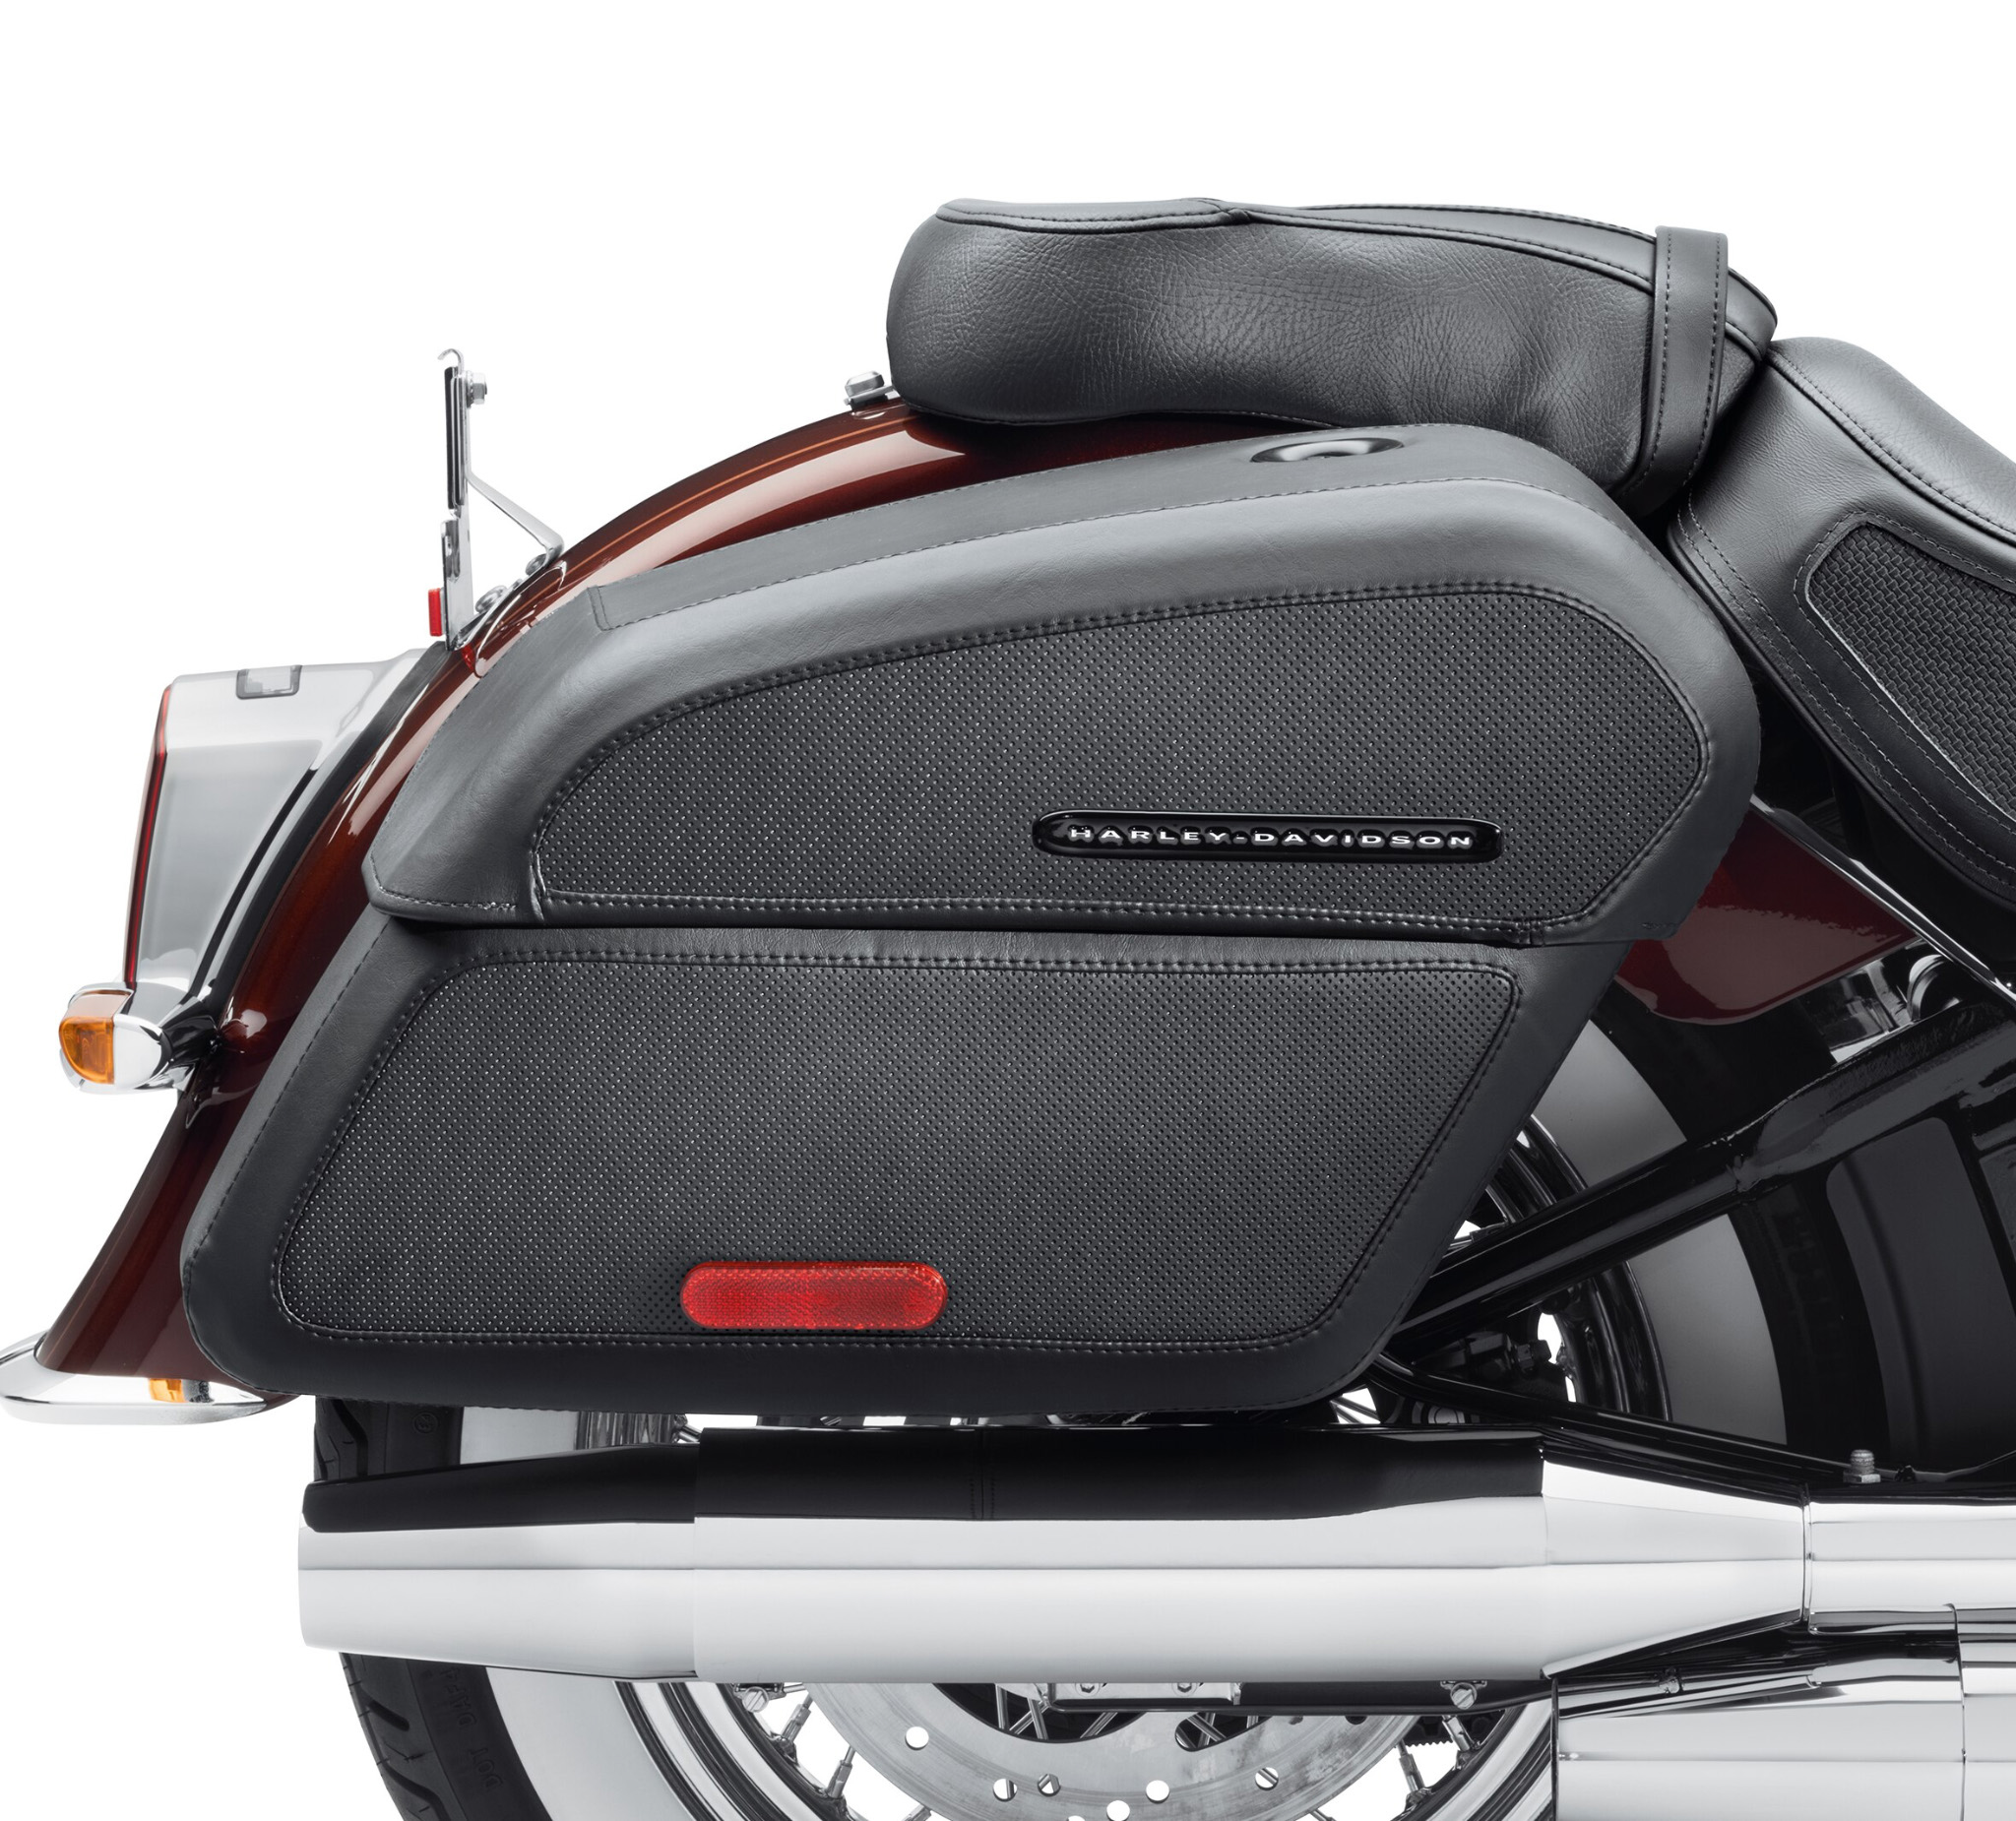 Harley Davidson Saddlebags. Hard & Leather Saddle Bags for Harley